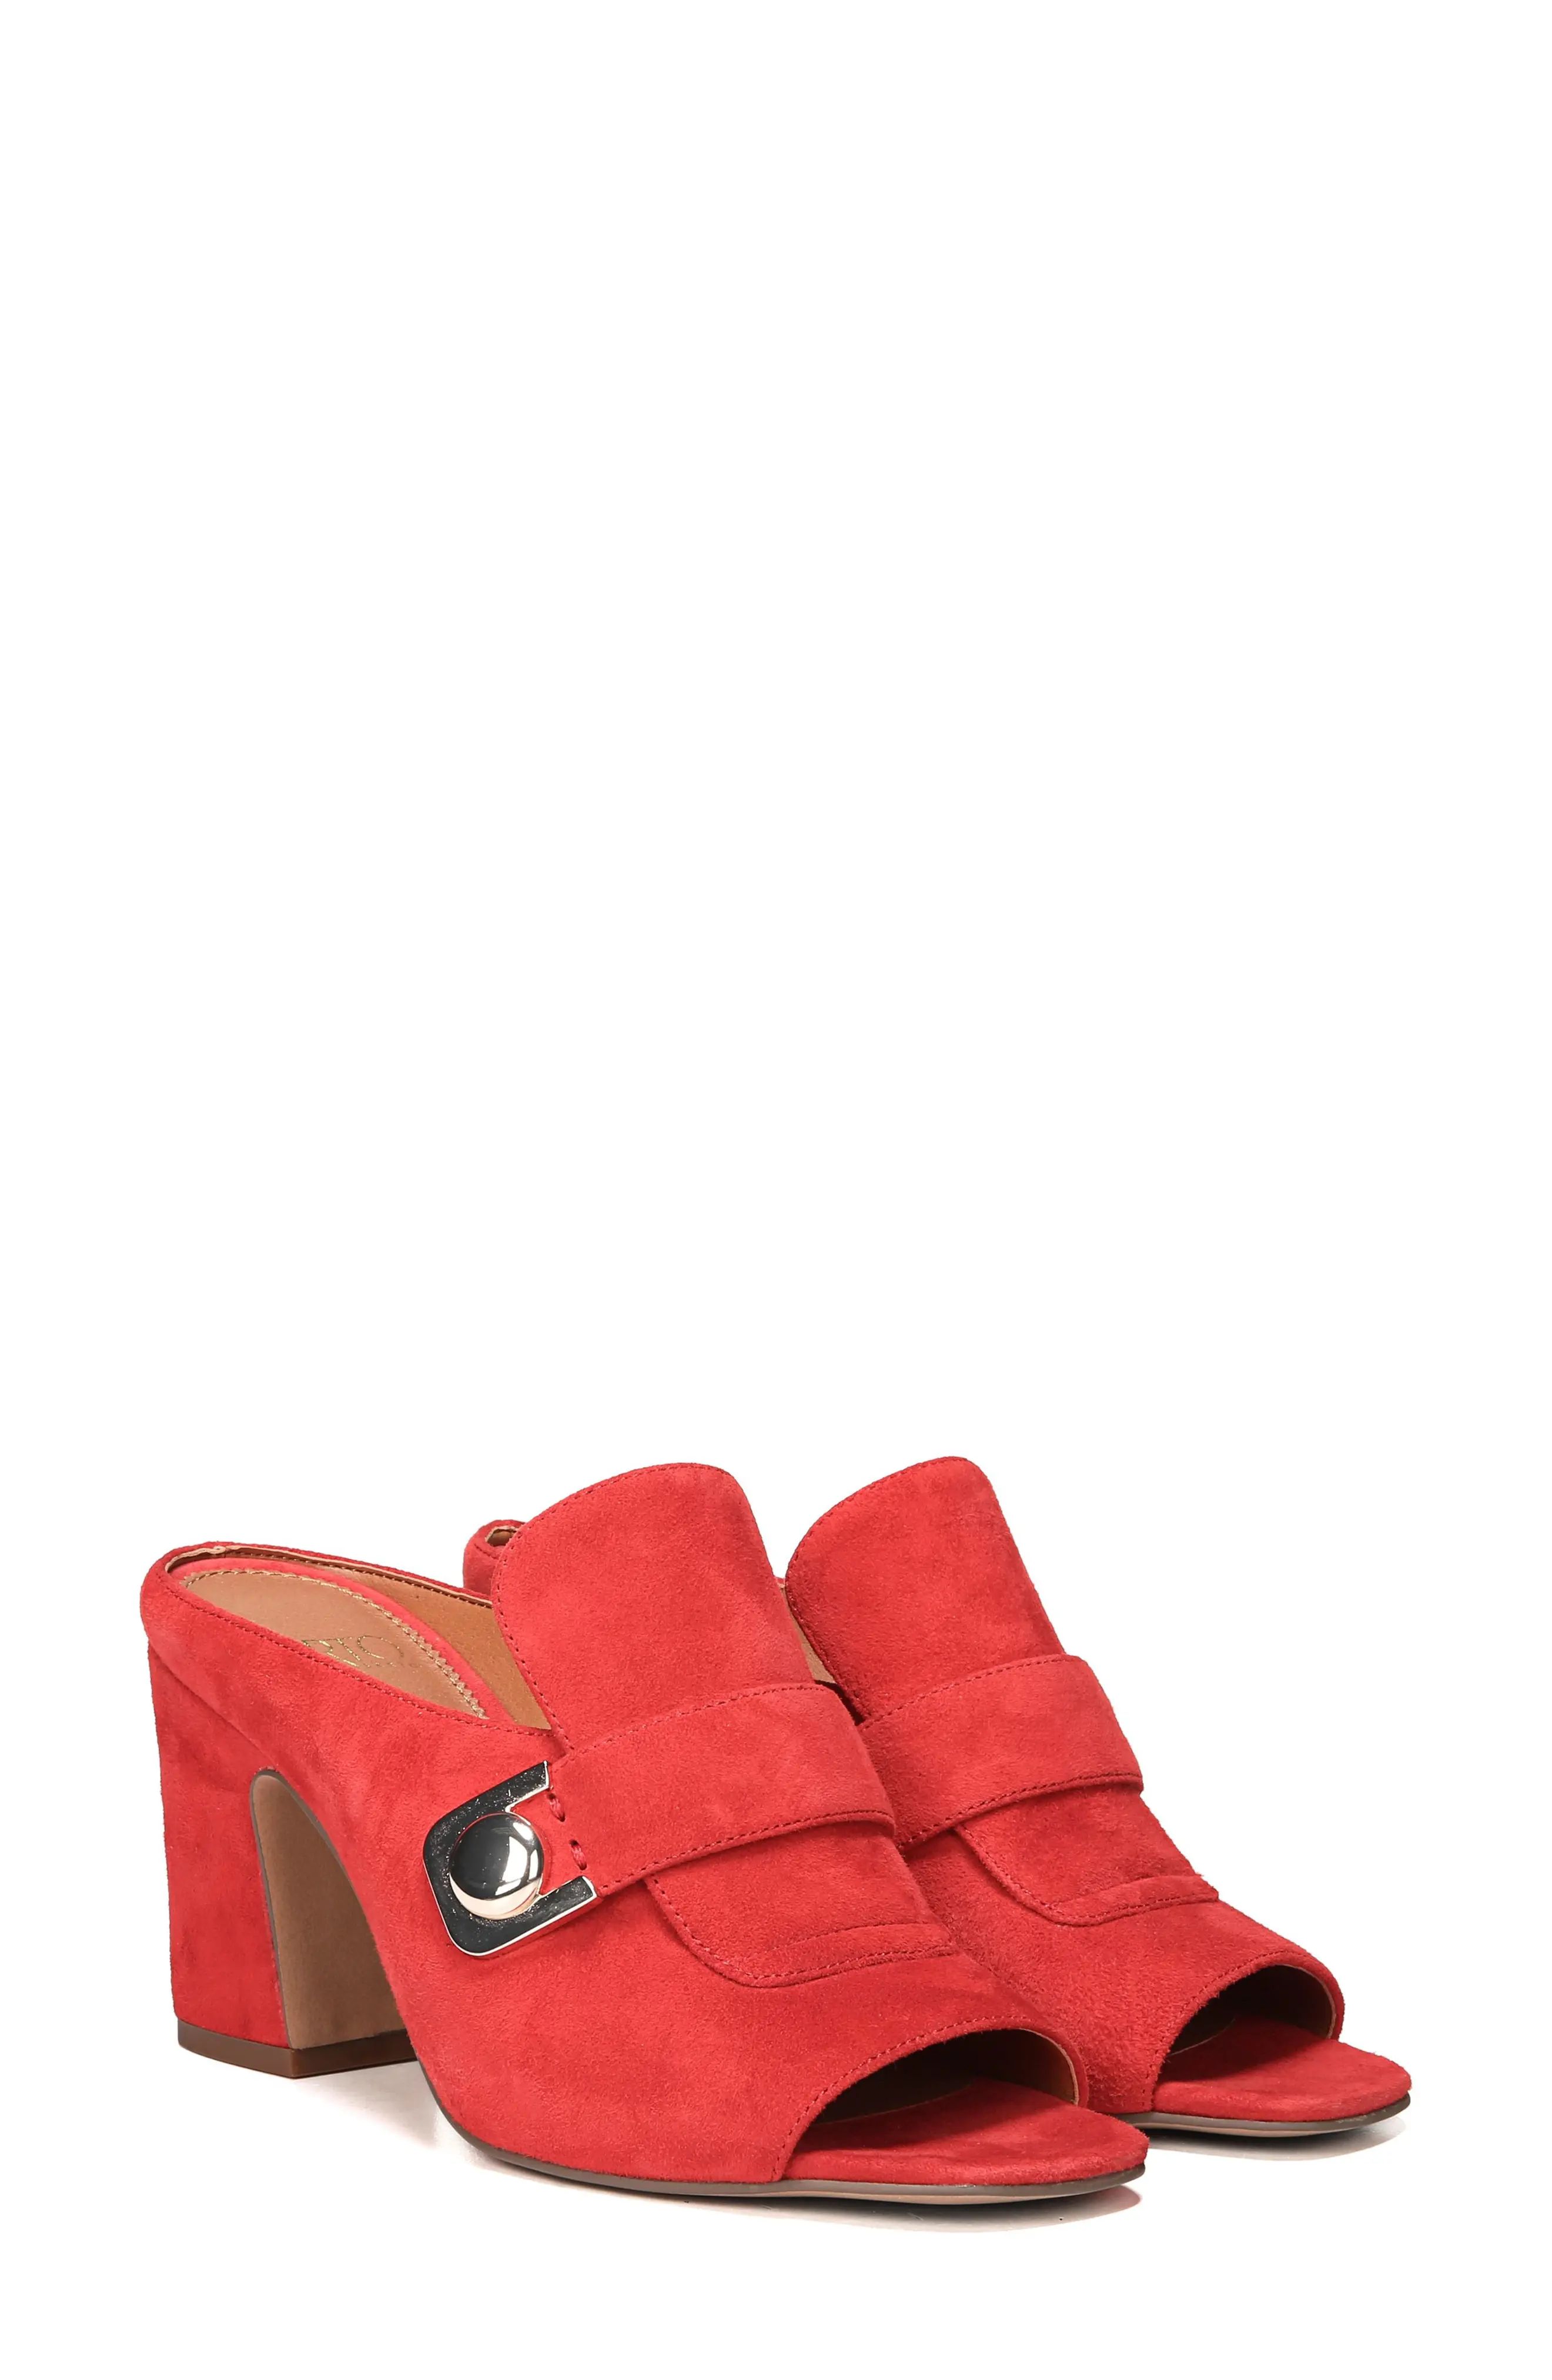 Women's Sarto By Franco Sarto Rosalie Block Heel Sandal, Size 5 M - Red | Nordstrom